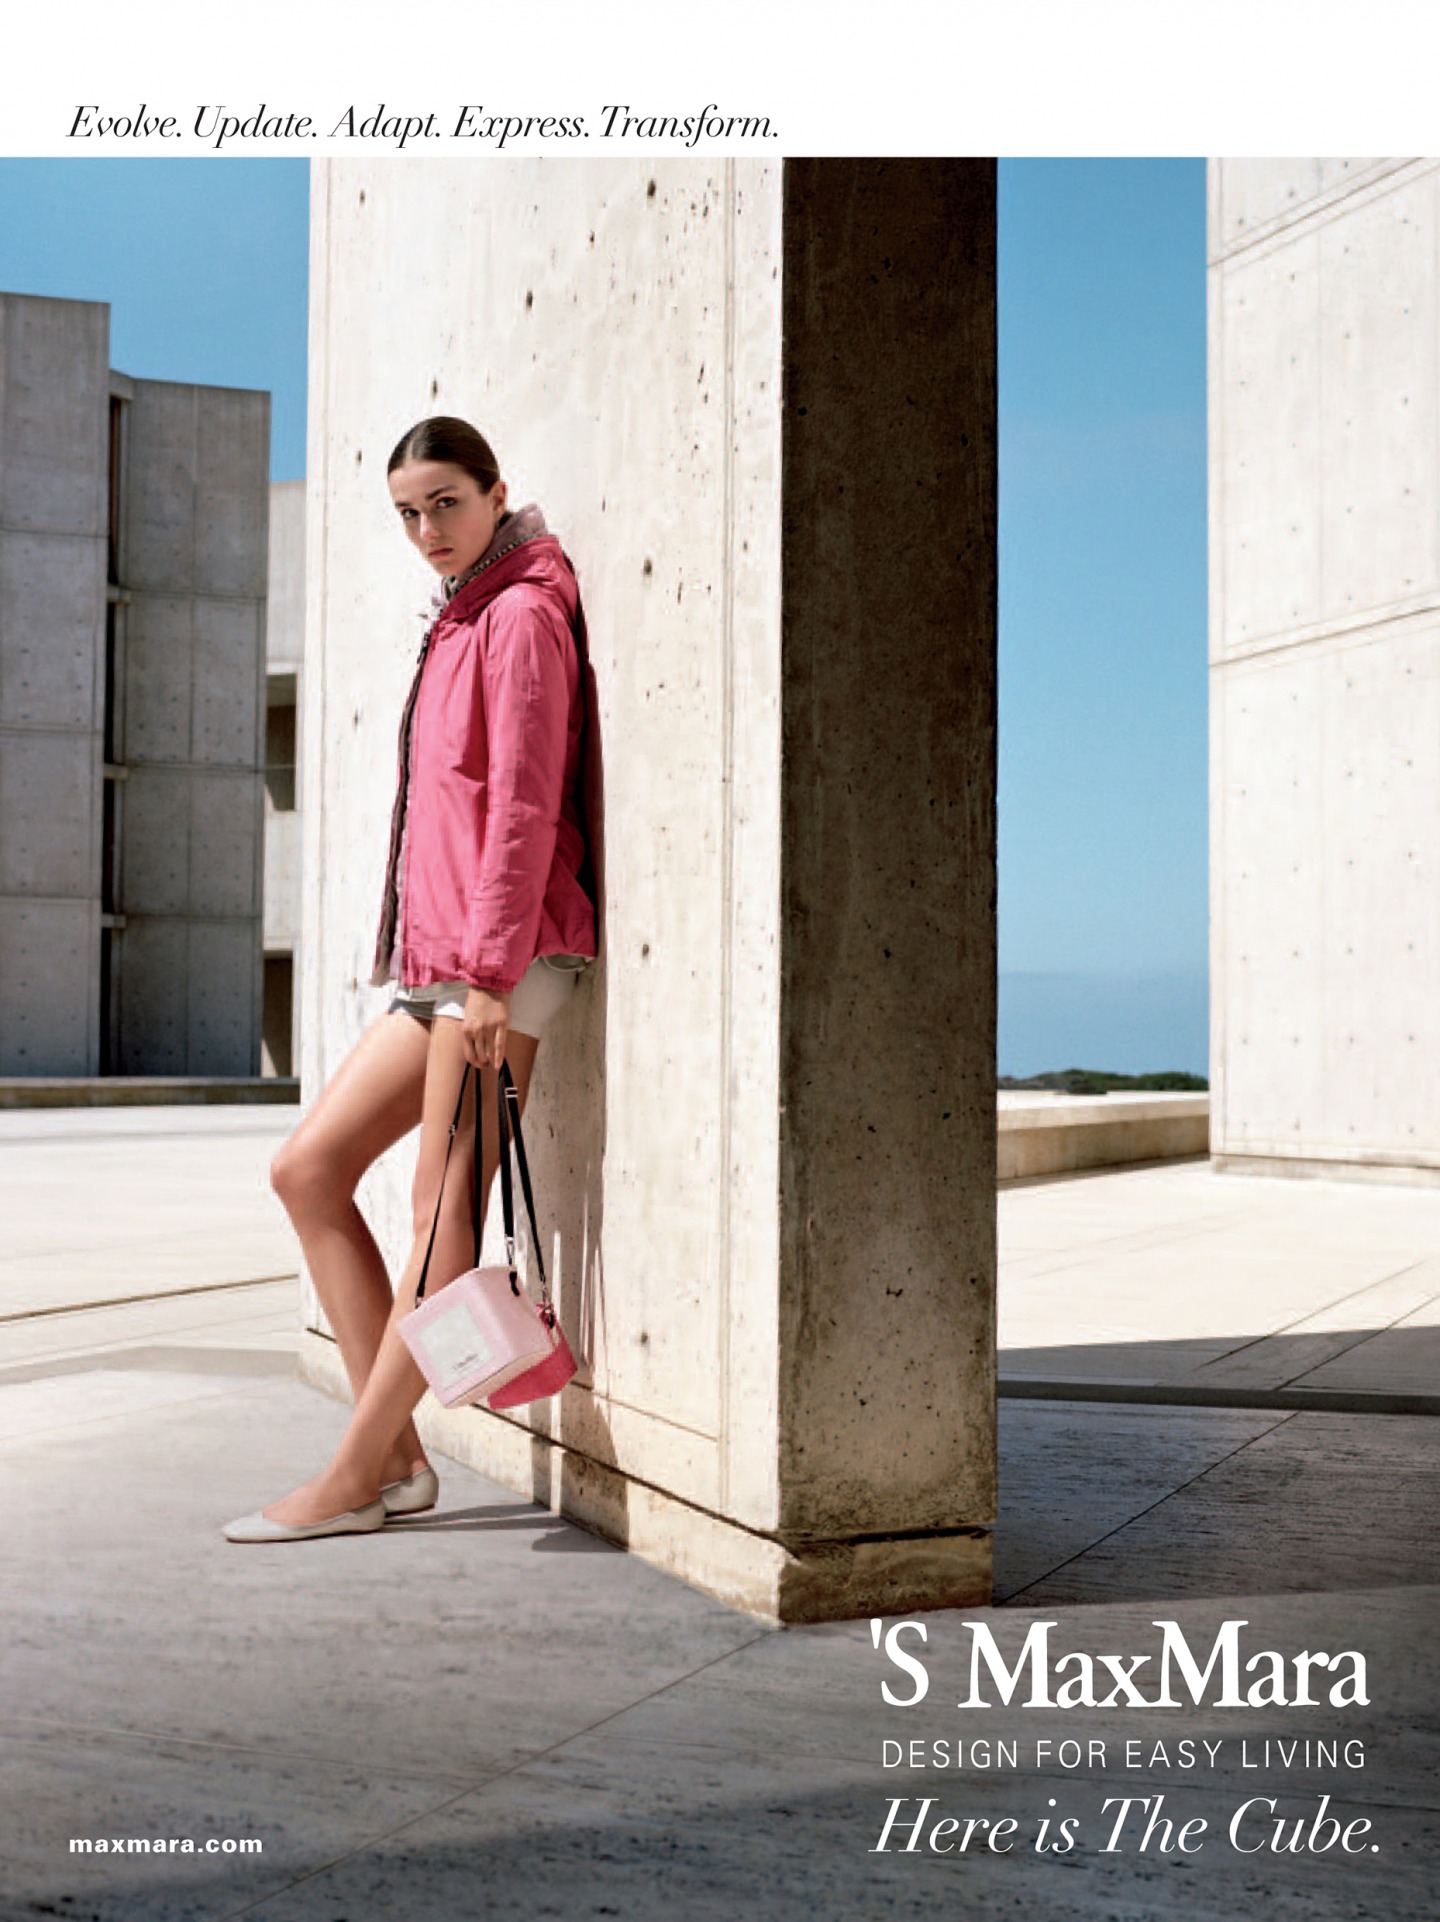 Max Mara and 'S Max Mara Are You Confused? Discover the Must-Know Fashion  Empire of Max Mara!